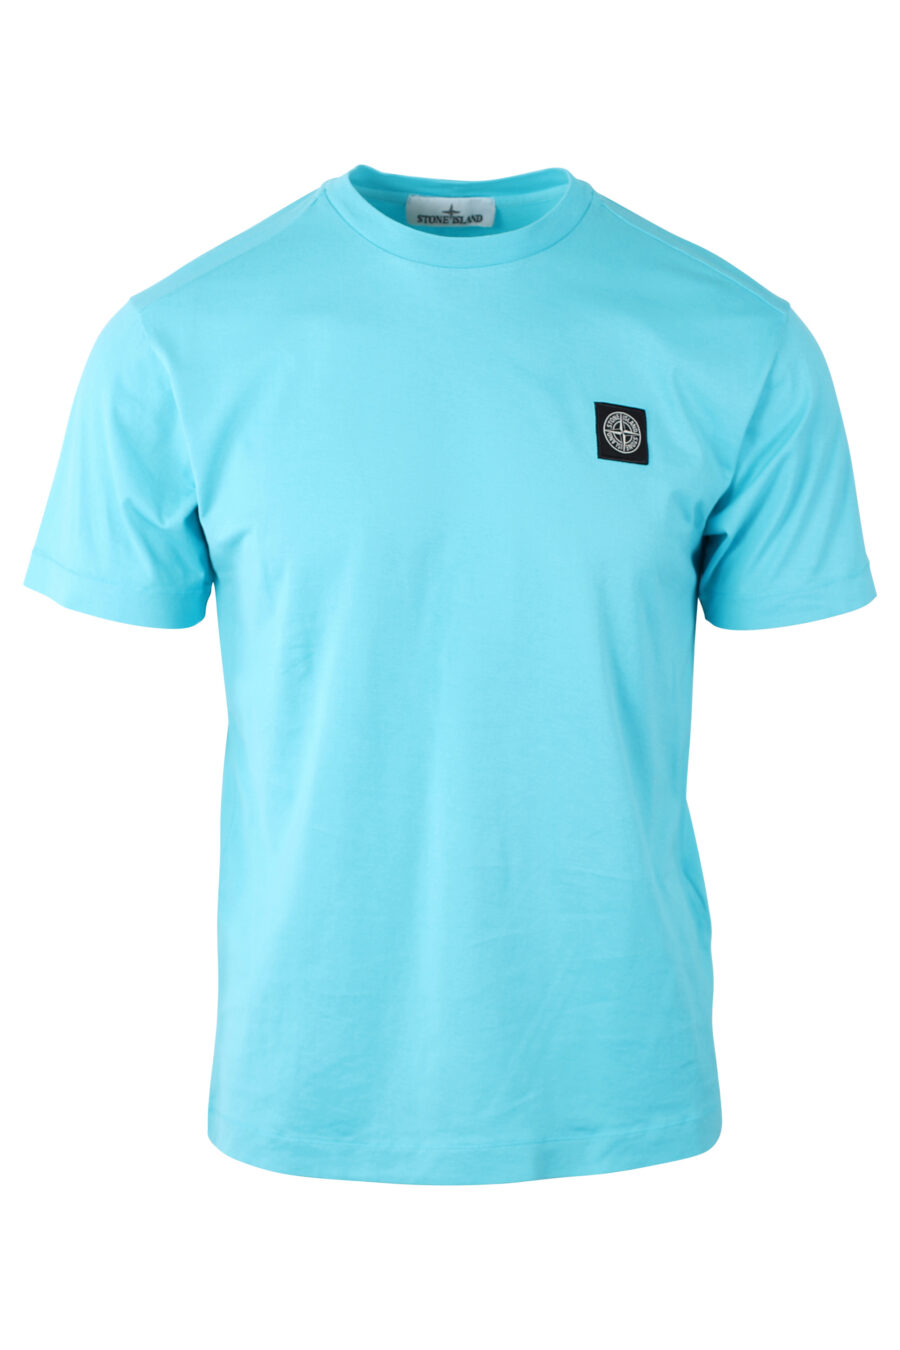 T-shirt turquoise avec mini patch logo noir - IMG 1170